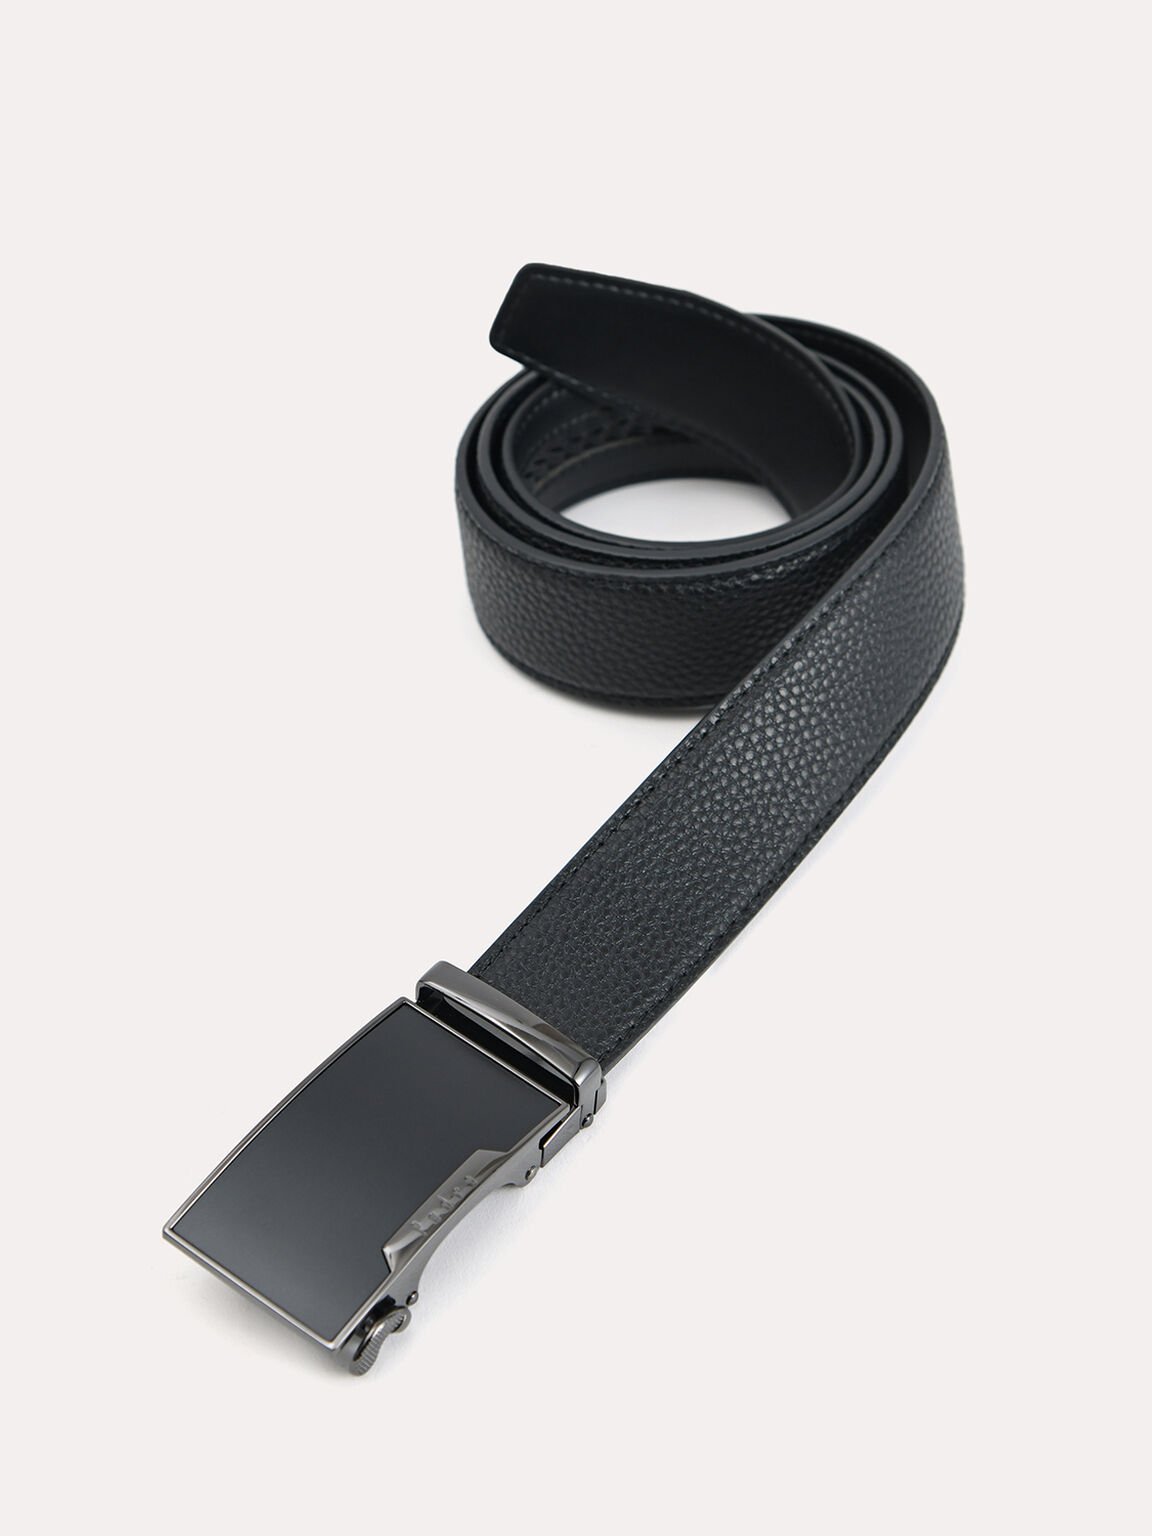 Automatic Textured Leather Belt, Black